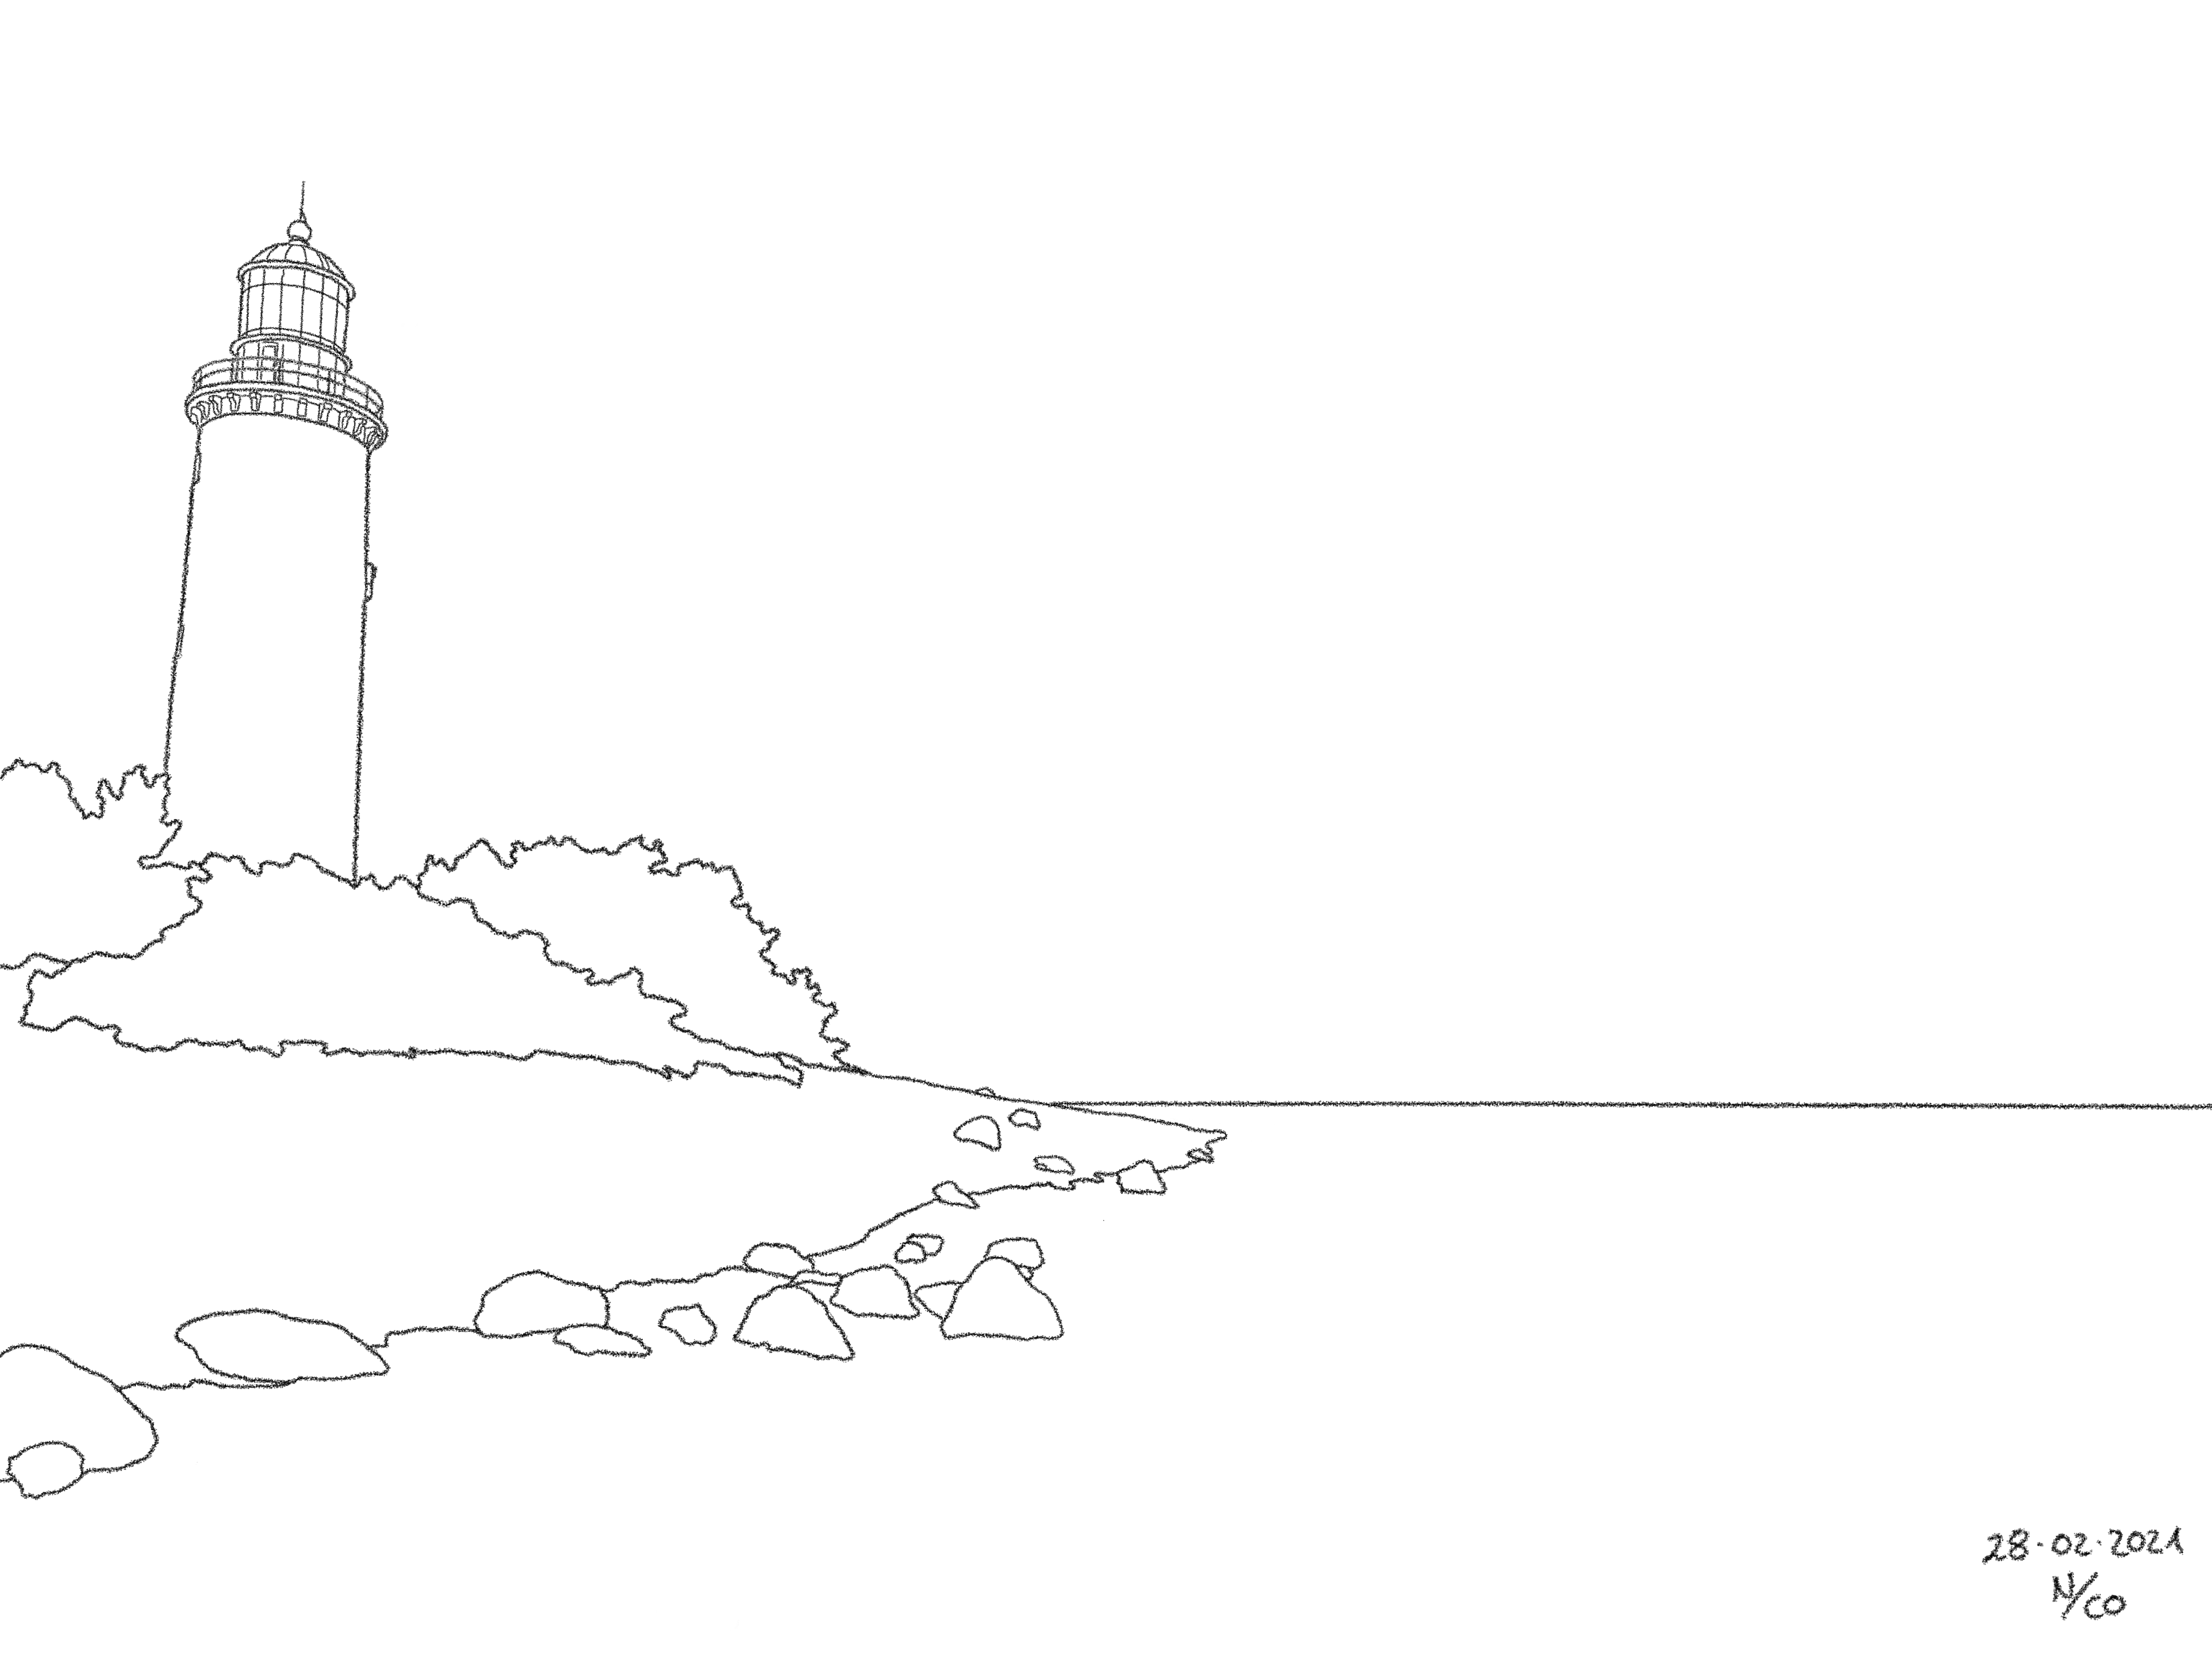 A drawing titled Beacon, based on a photo taken at Fårö fyr on Fårö as part of Gotland.